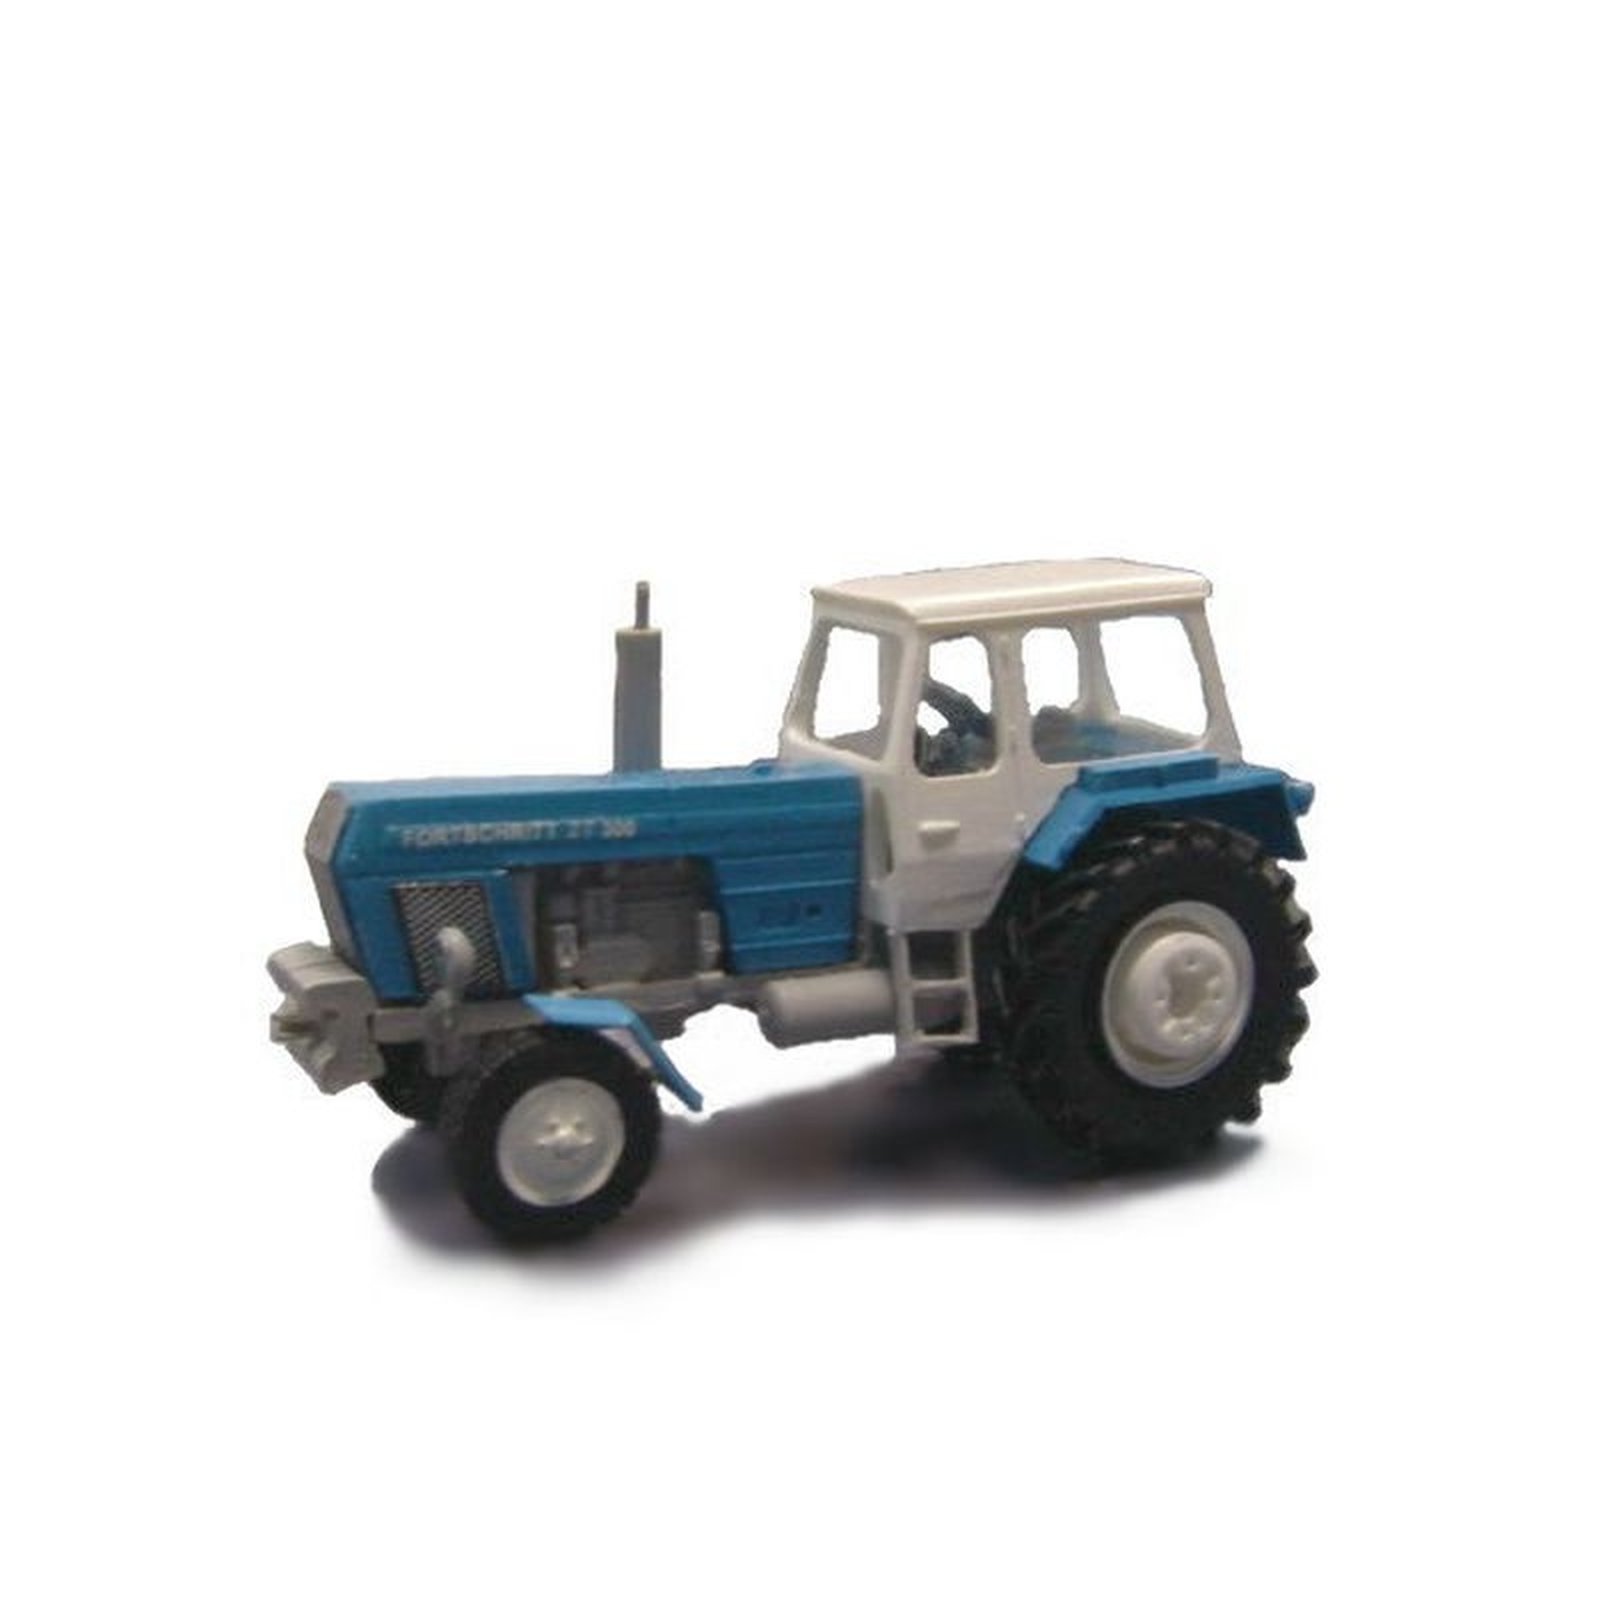 RK-Modelle® 996020-B-bl Traktor ZT300 blau (aus ICAR-BS)